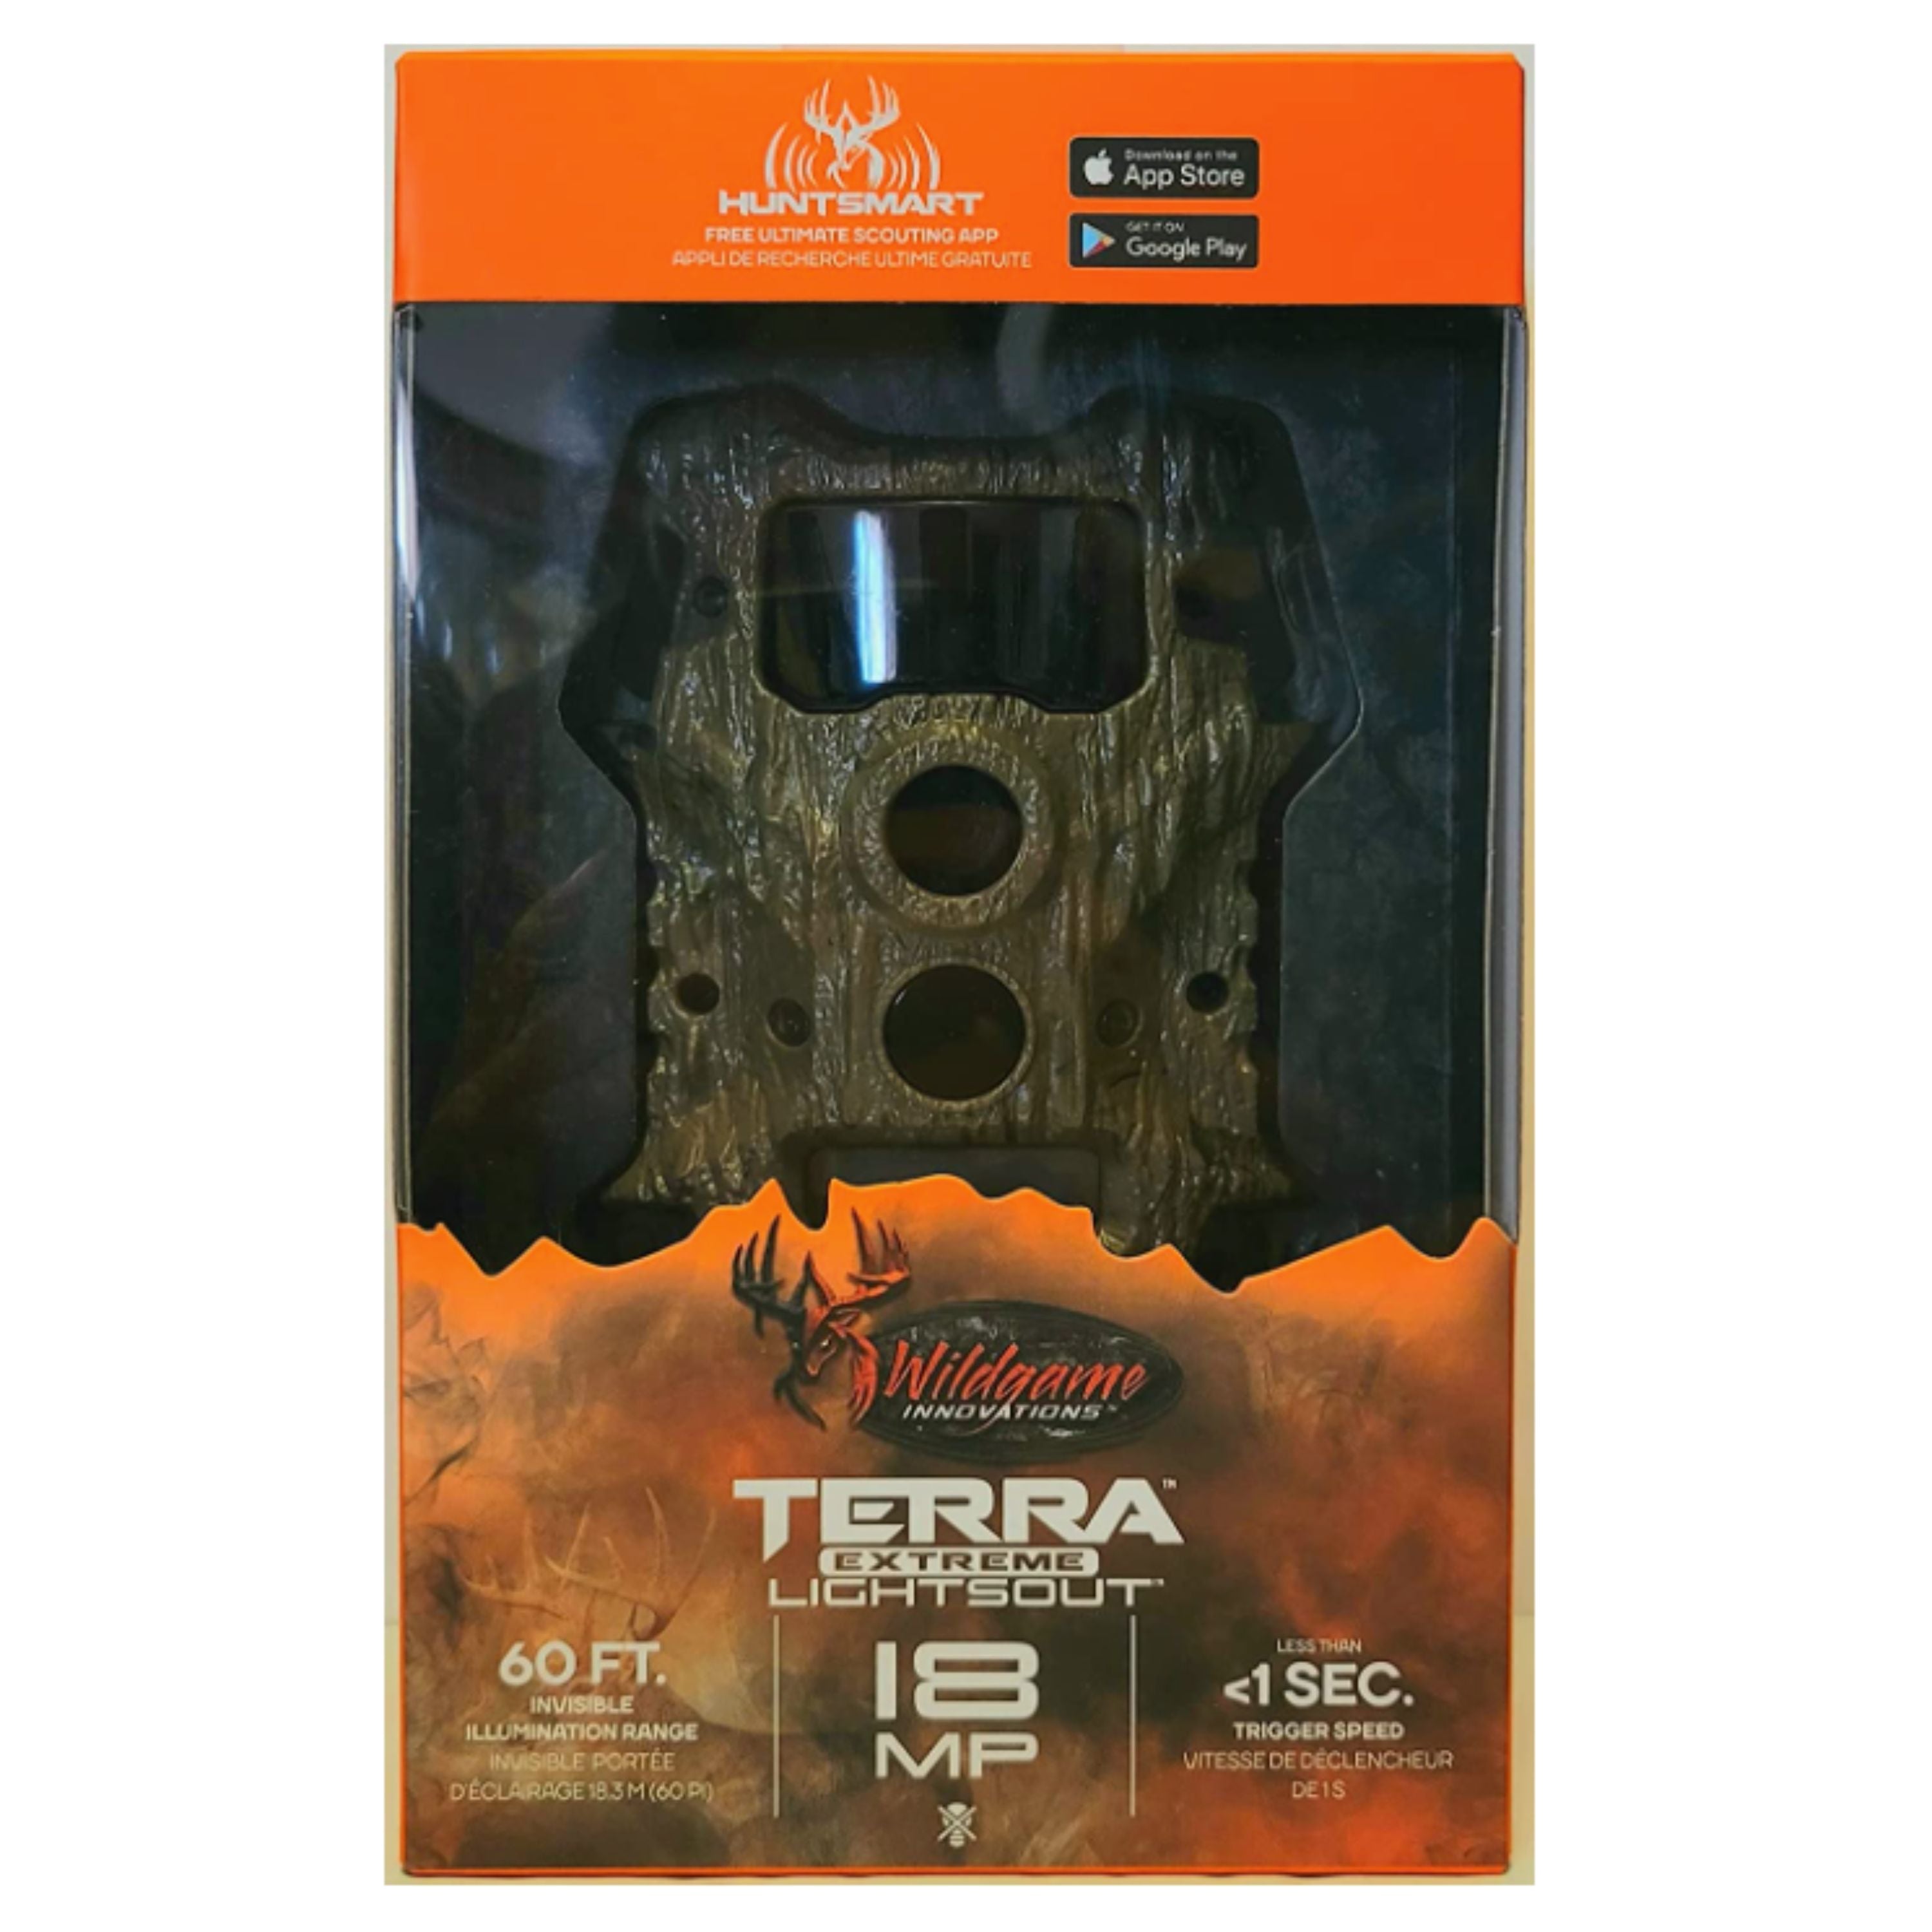 Caméra "Terra Extreme 18 Lightsout"||"Terra Extreme 18 Lightsout" Camera